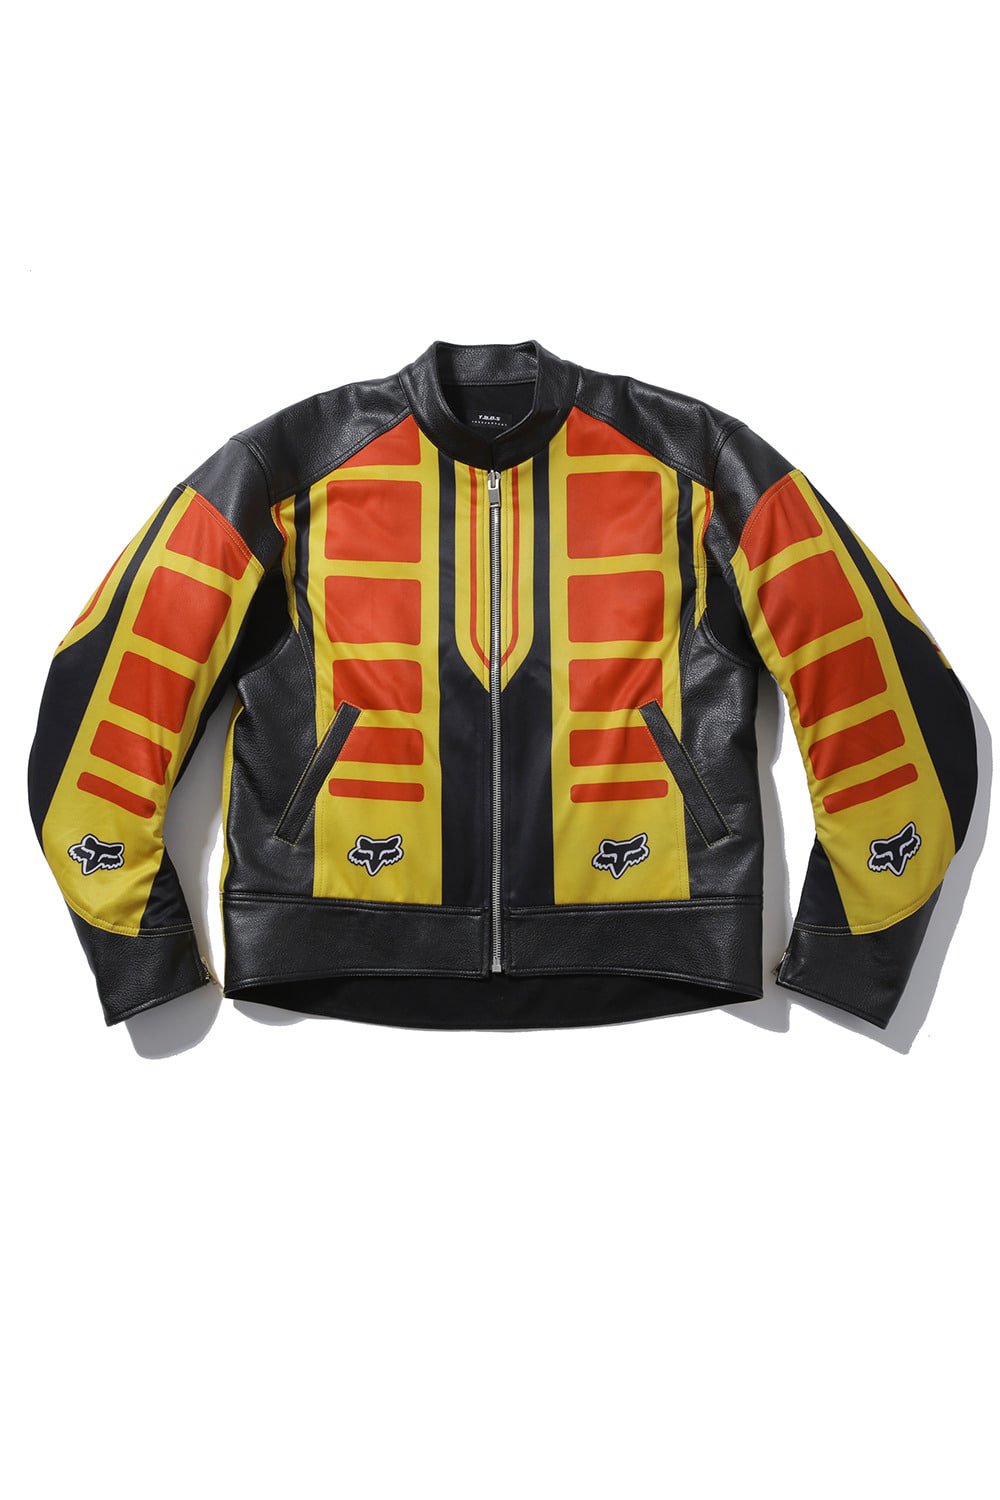 Fox racing detail rider jacket